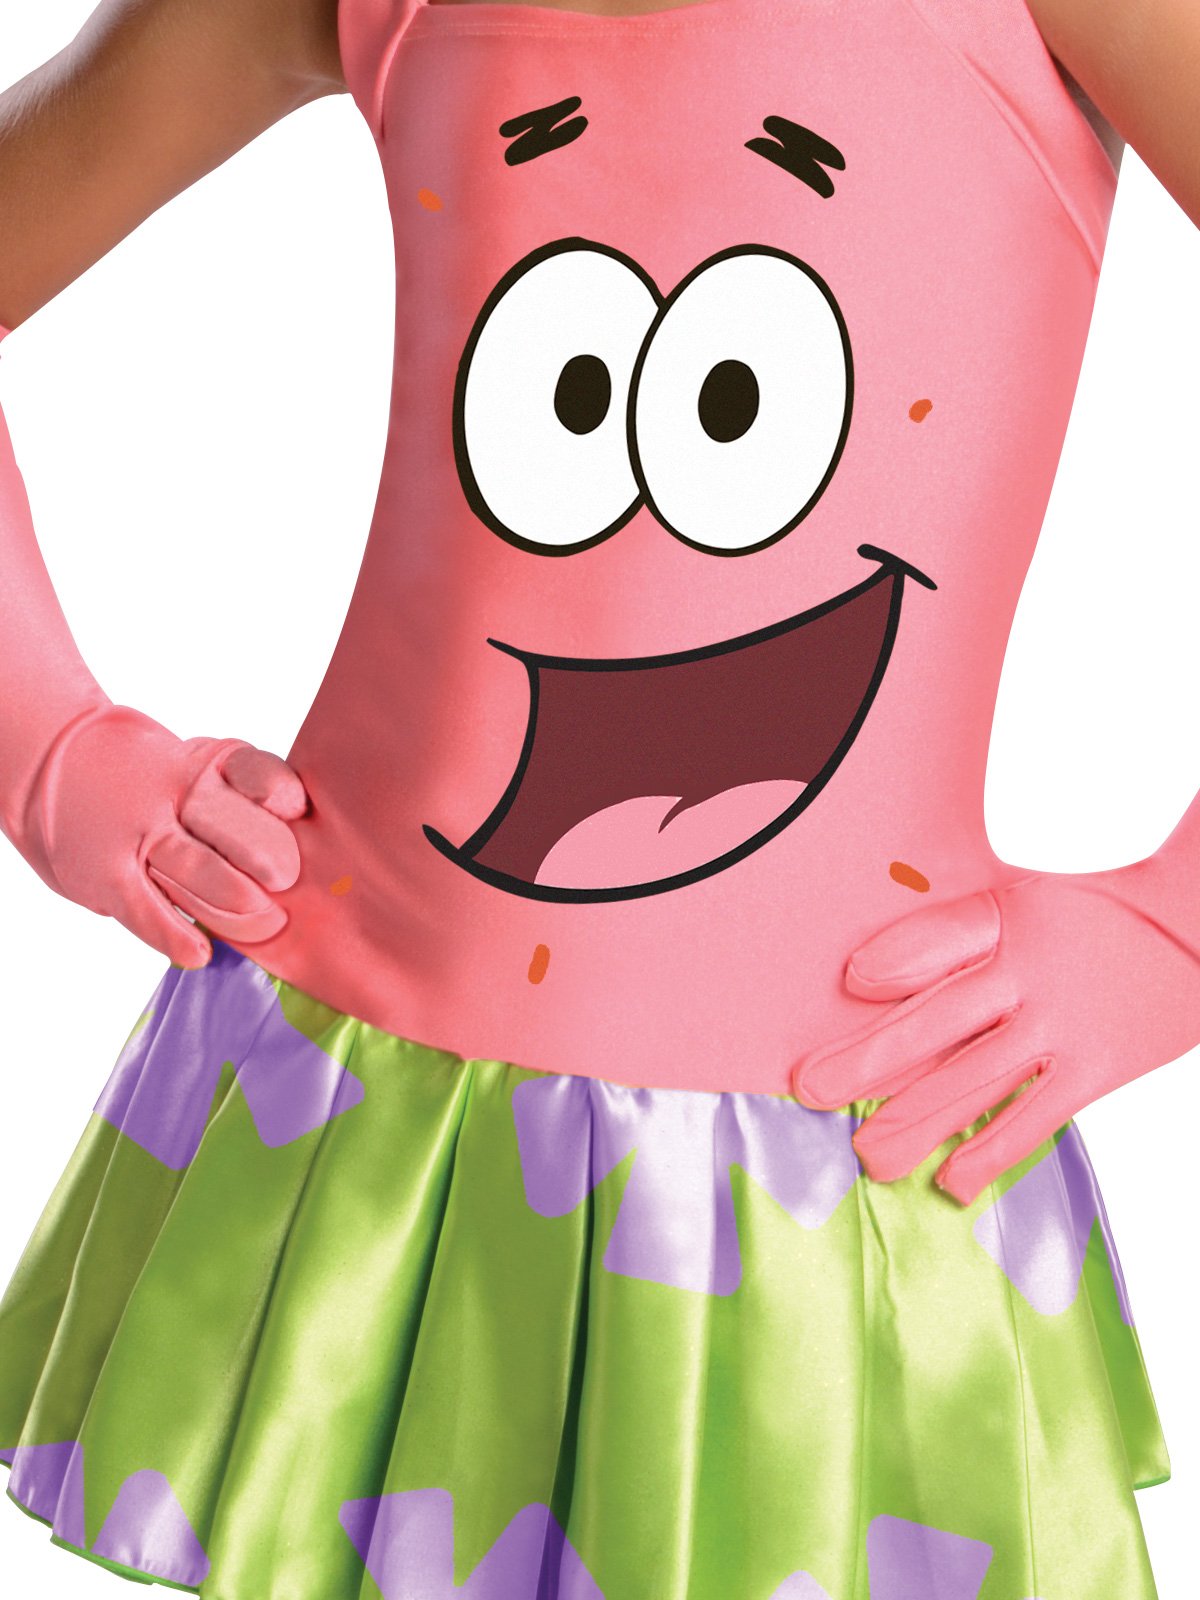 Patrick Star Costume for Kids - Nickelodeon SpongeBob SquarePants